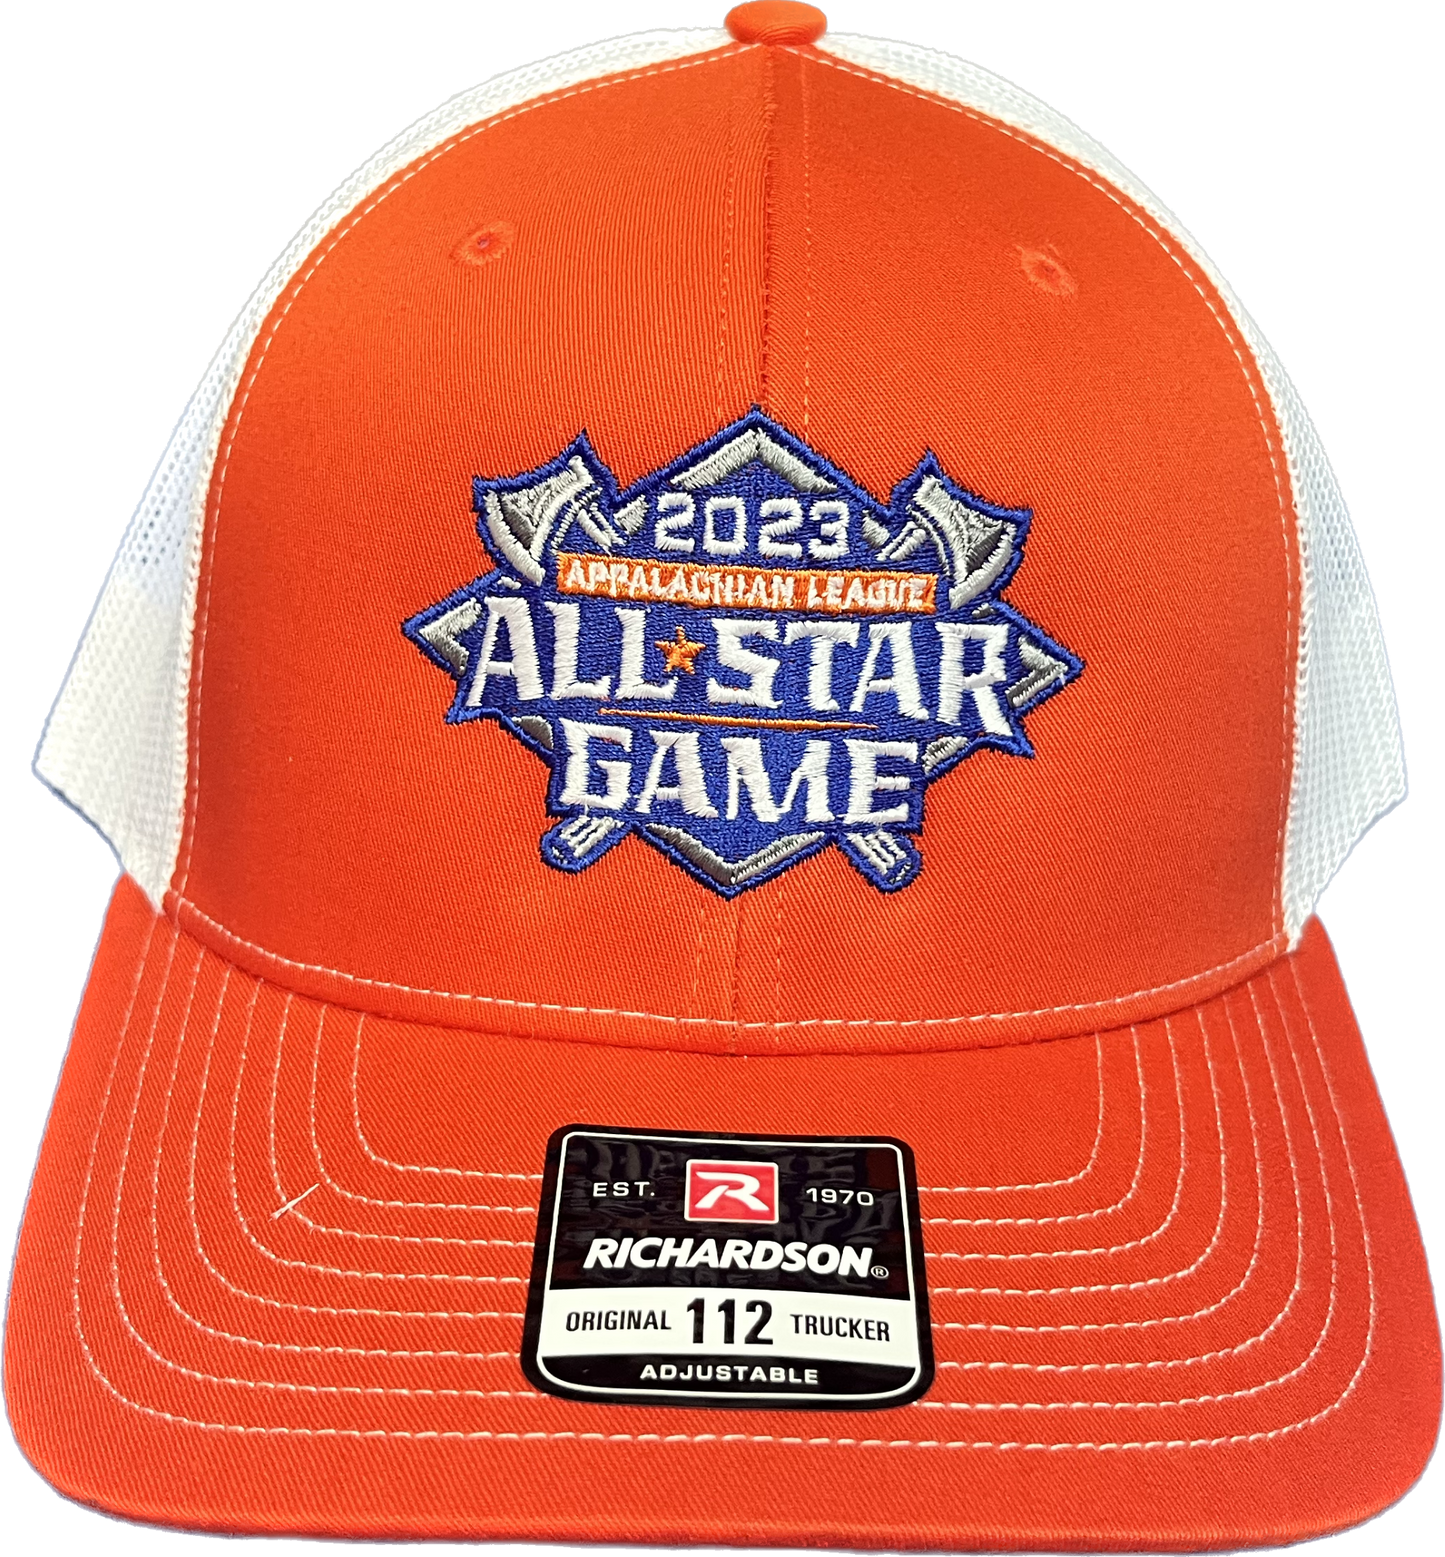 2023 All-Star Orange Trucker